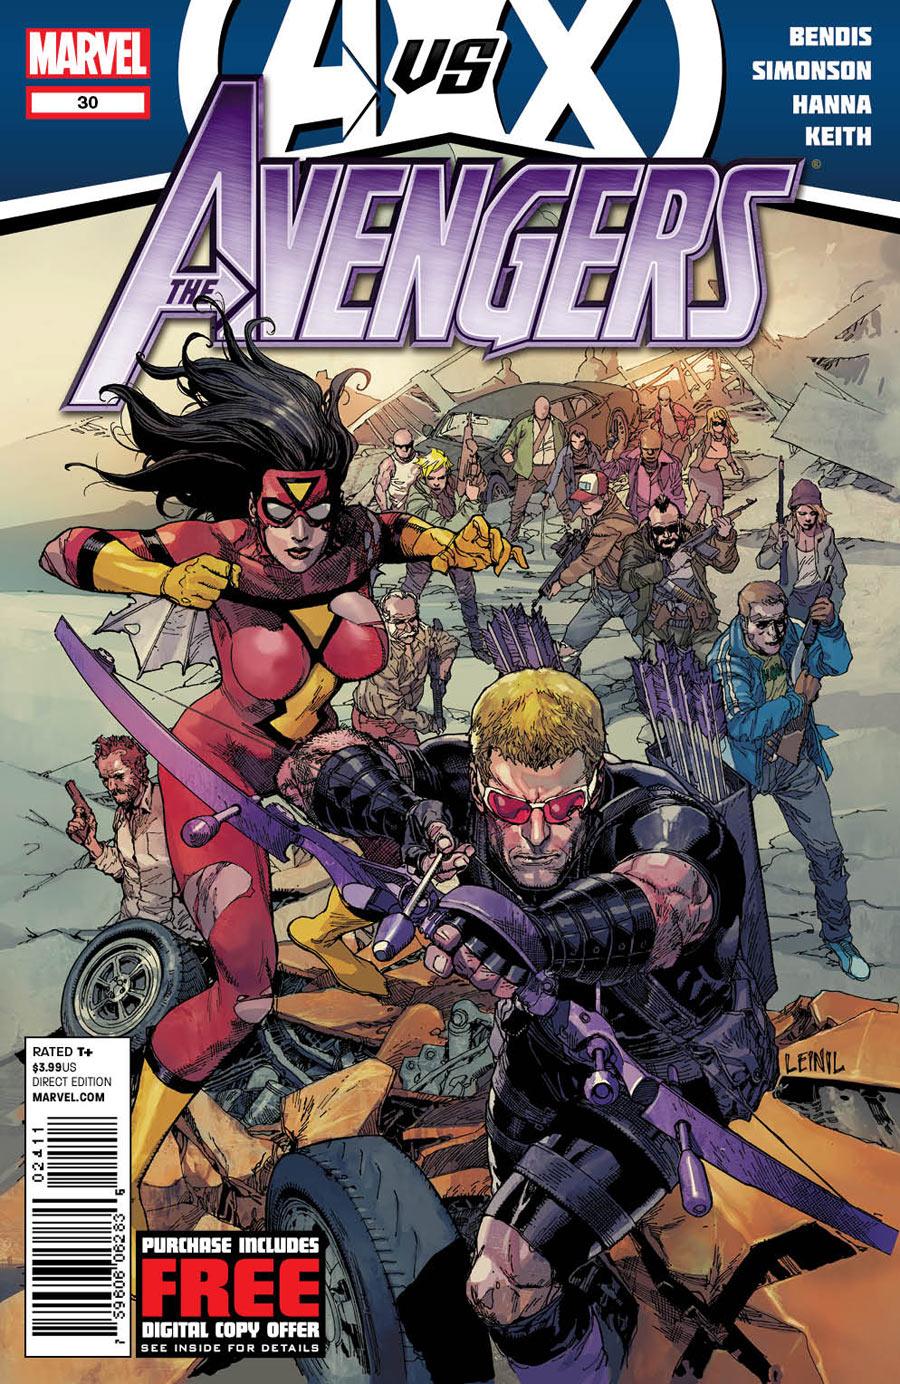 The Avengers Vol. 4 #30